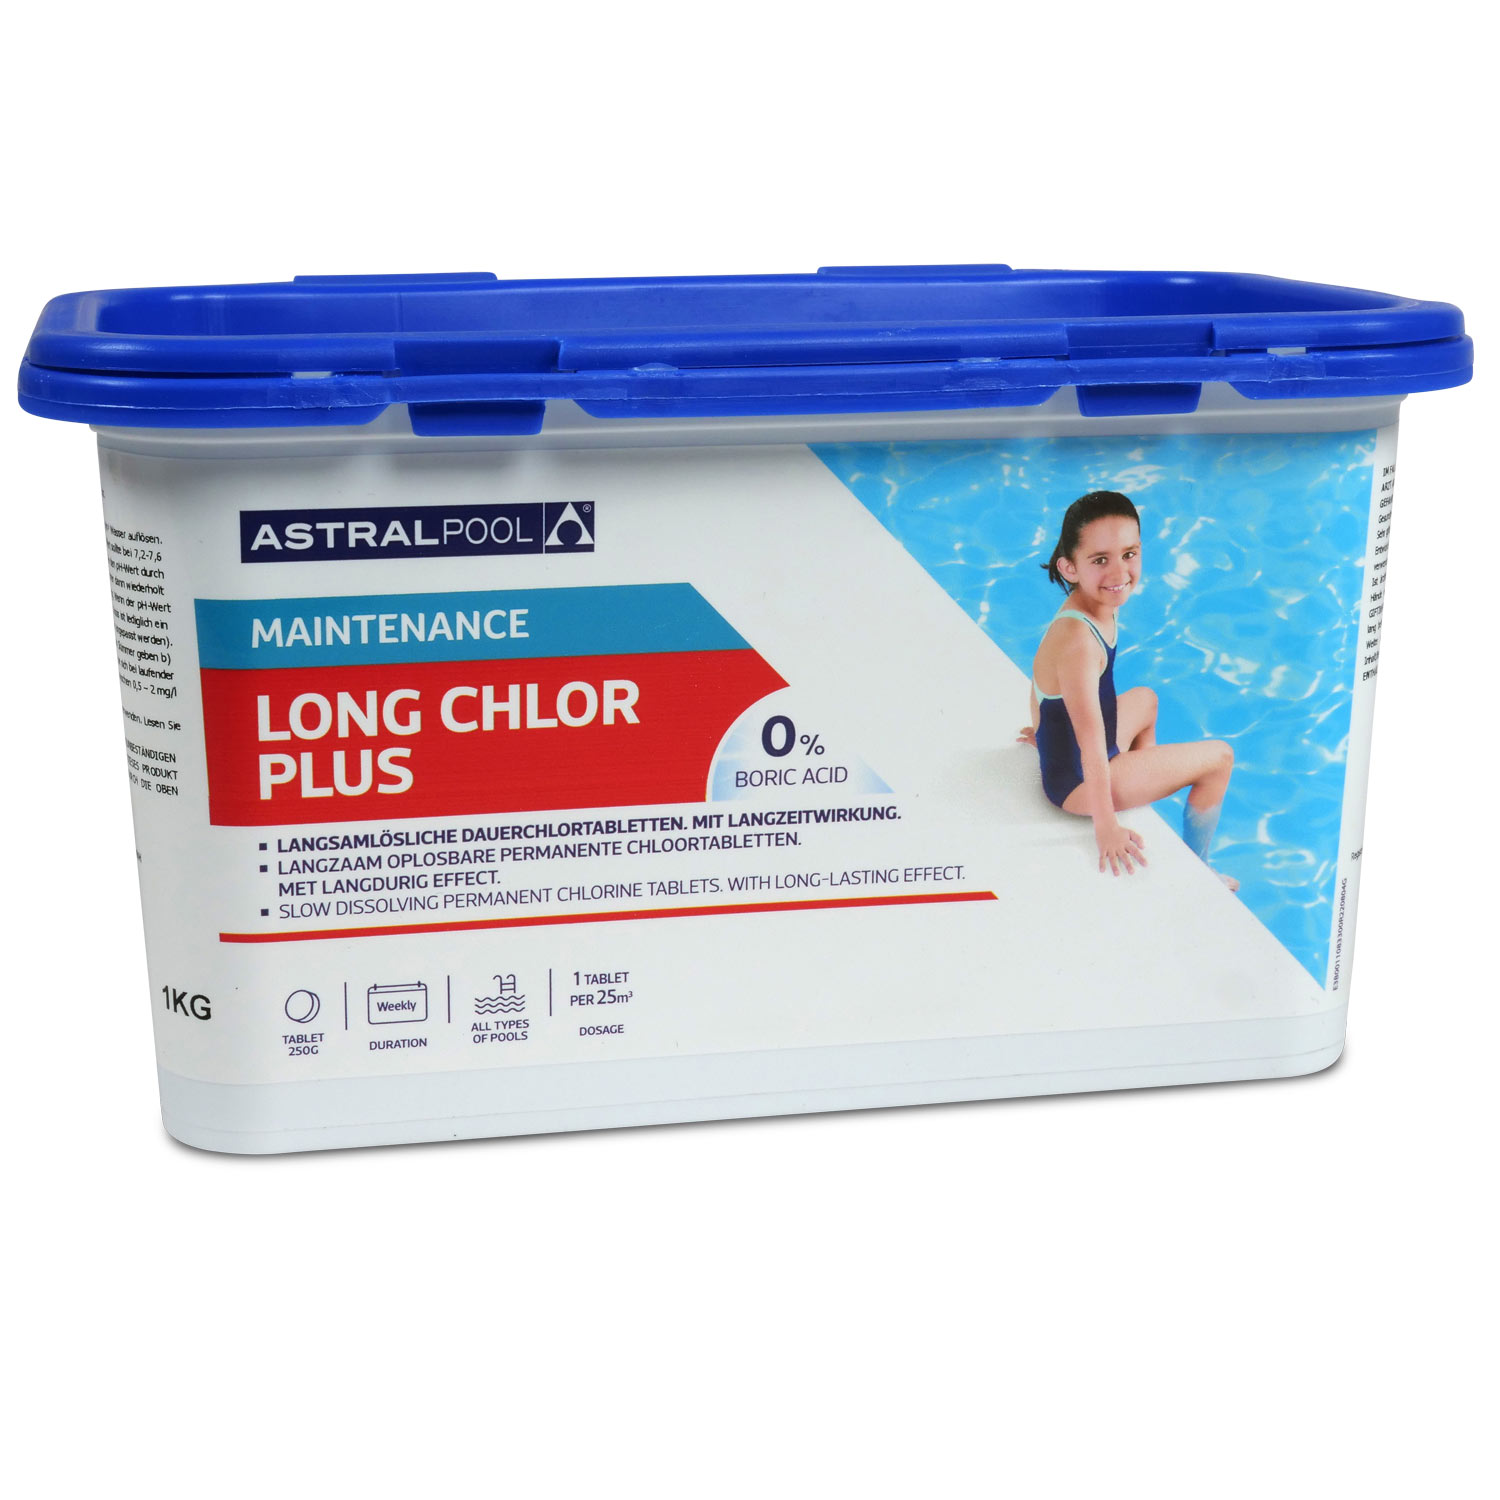 Astralpool Long Chlor Plus 250g, organisch, langsam löslich 1,0 kg